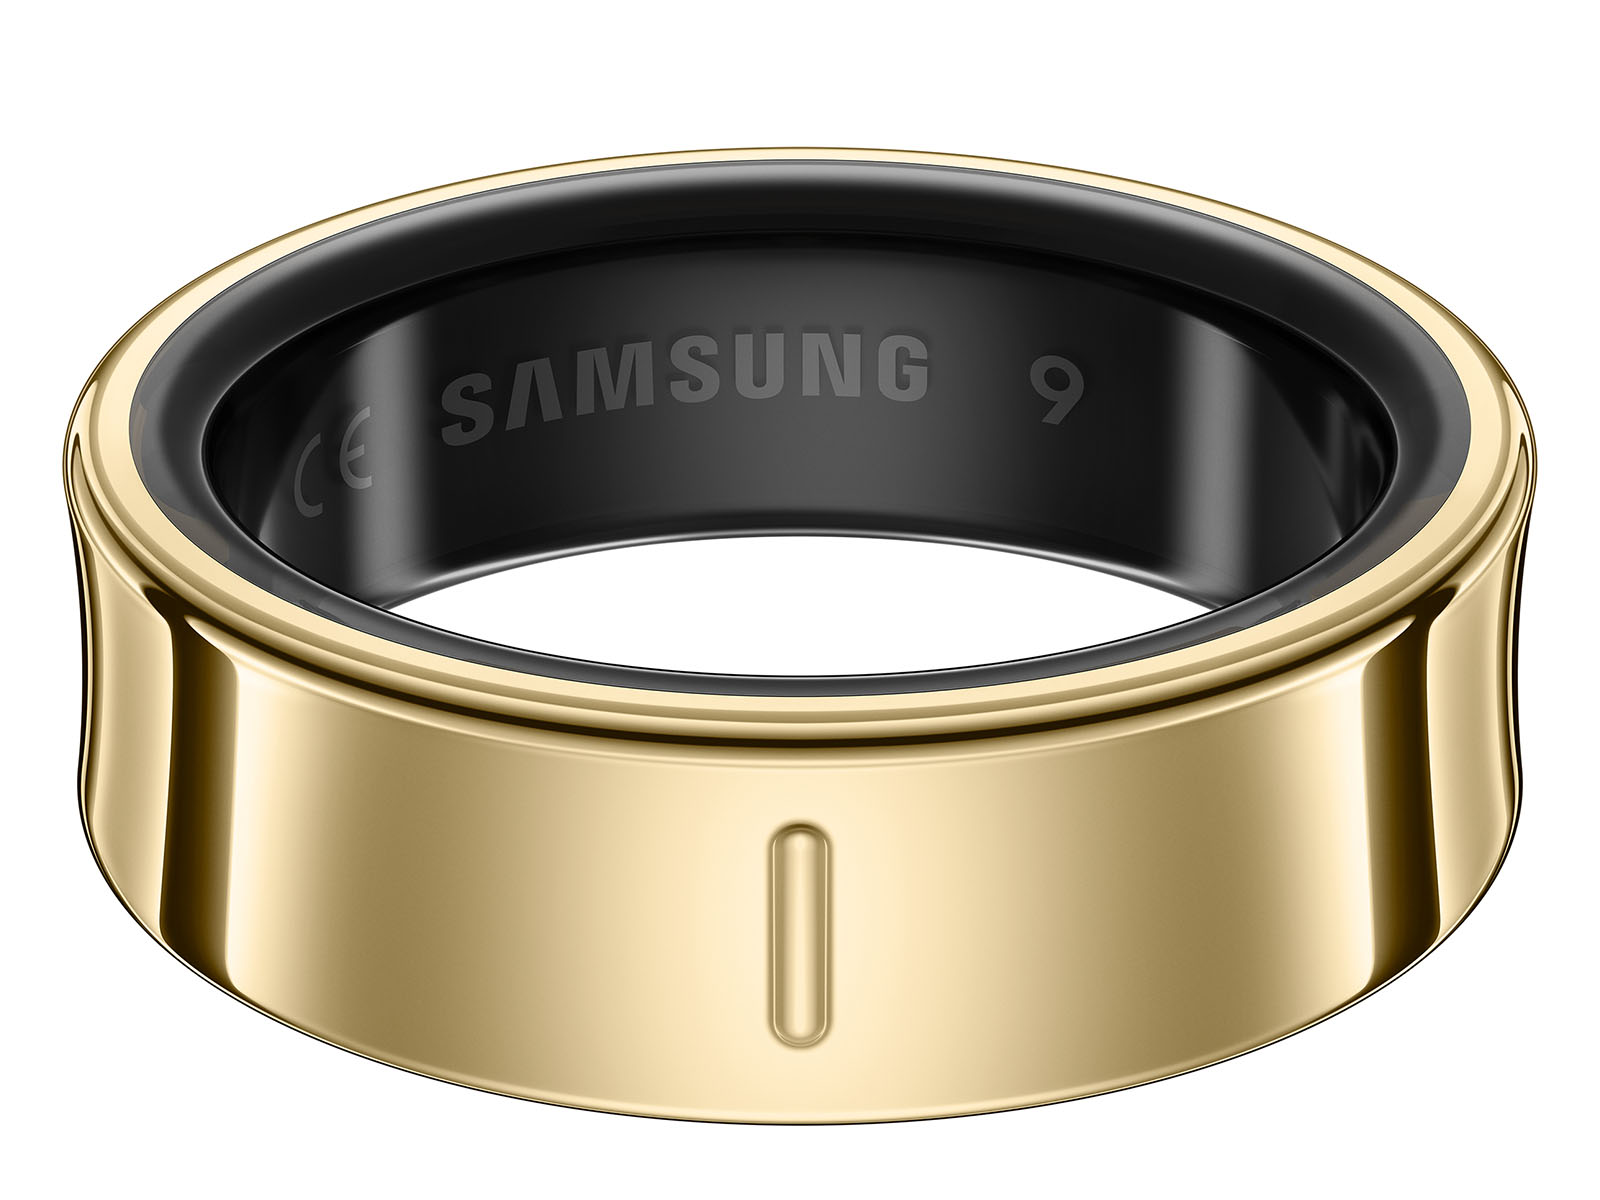 Thumbnail image of Galaxy Ring, Size 12, Titanium Gold